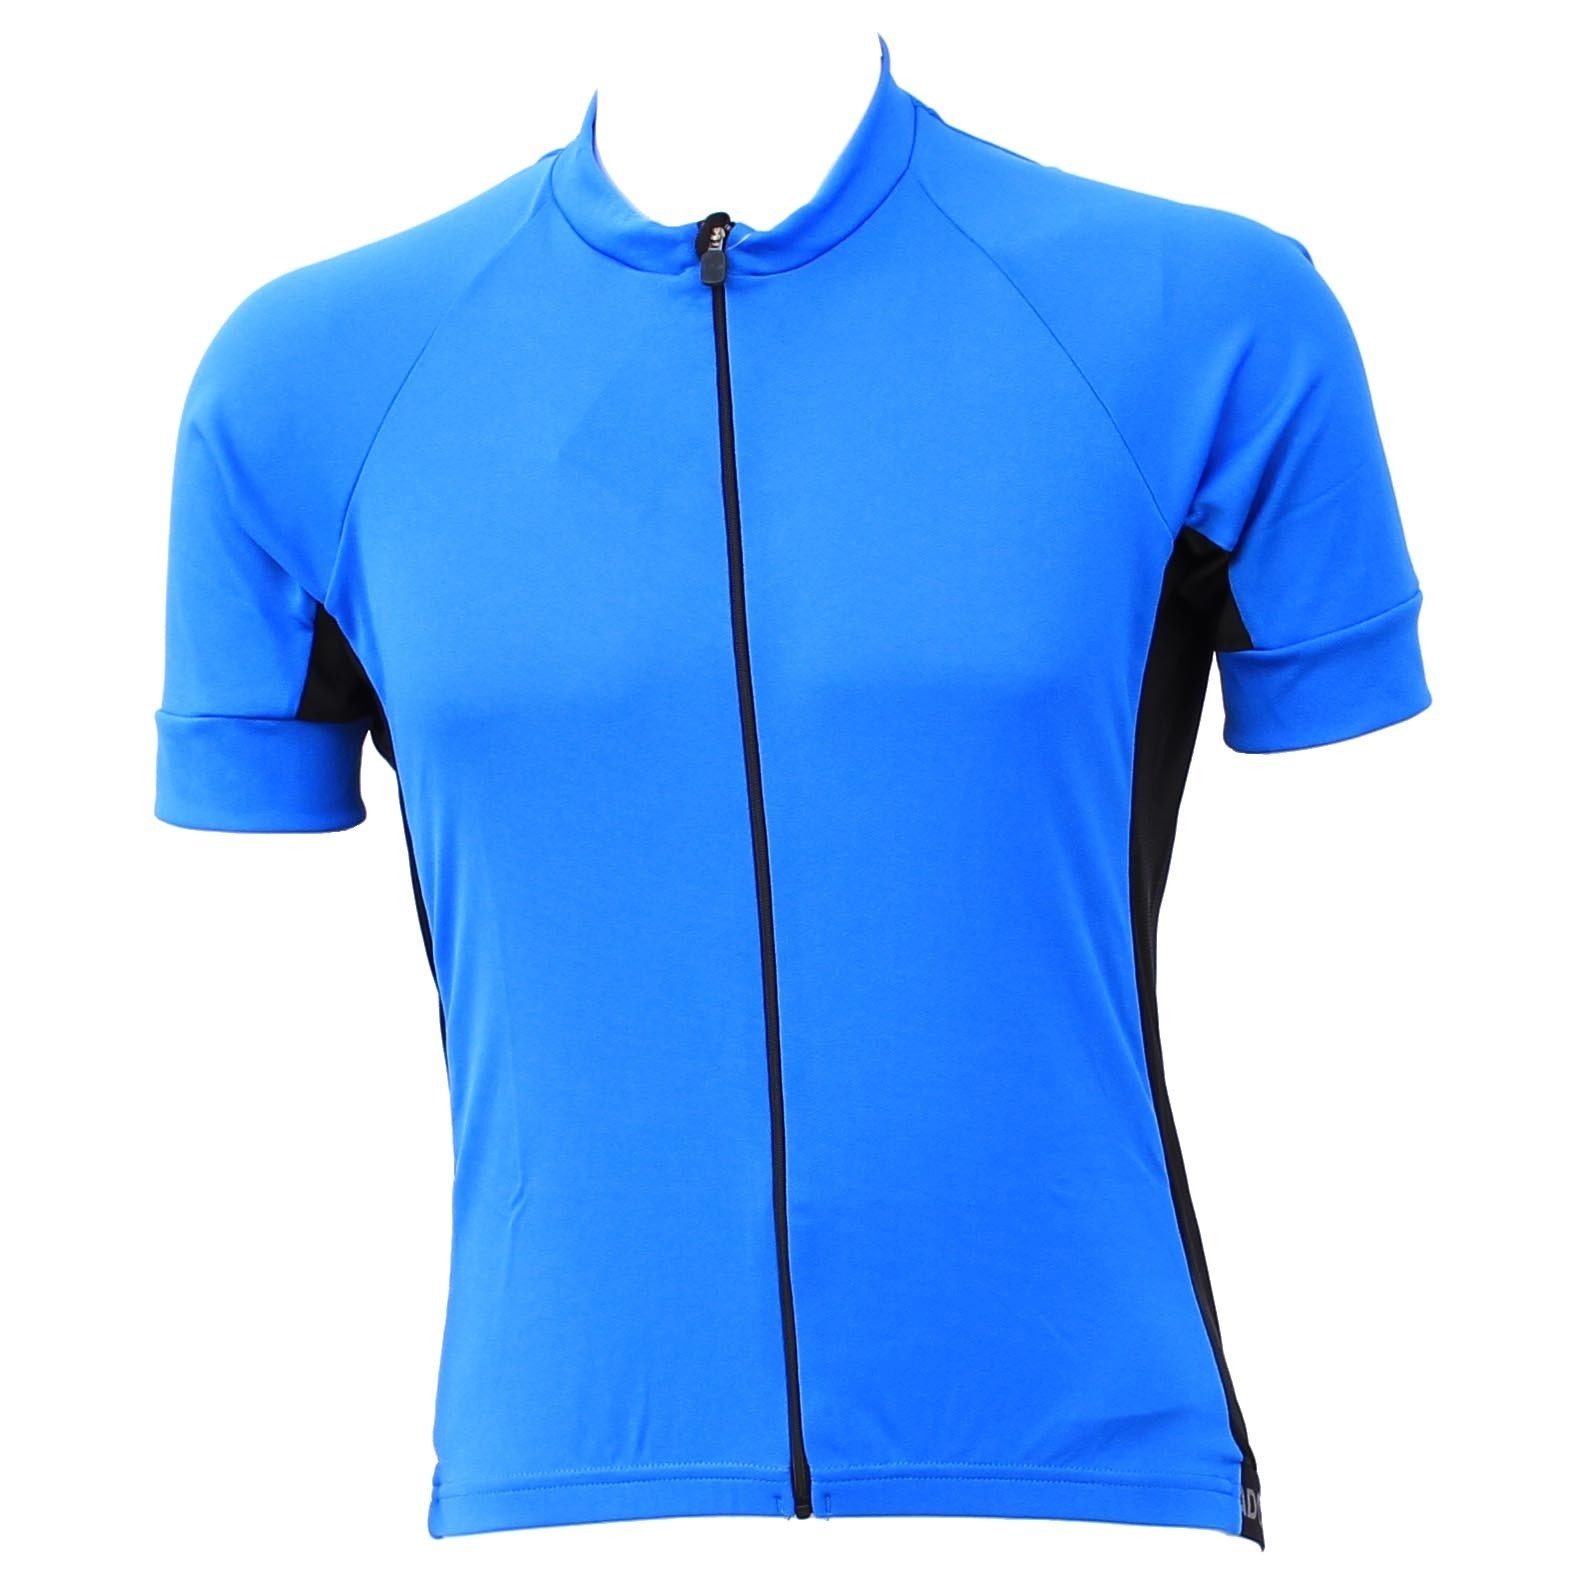 Jackbroad Premium Quality Cycling Short Sleeves Blue XL